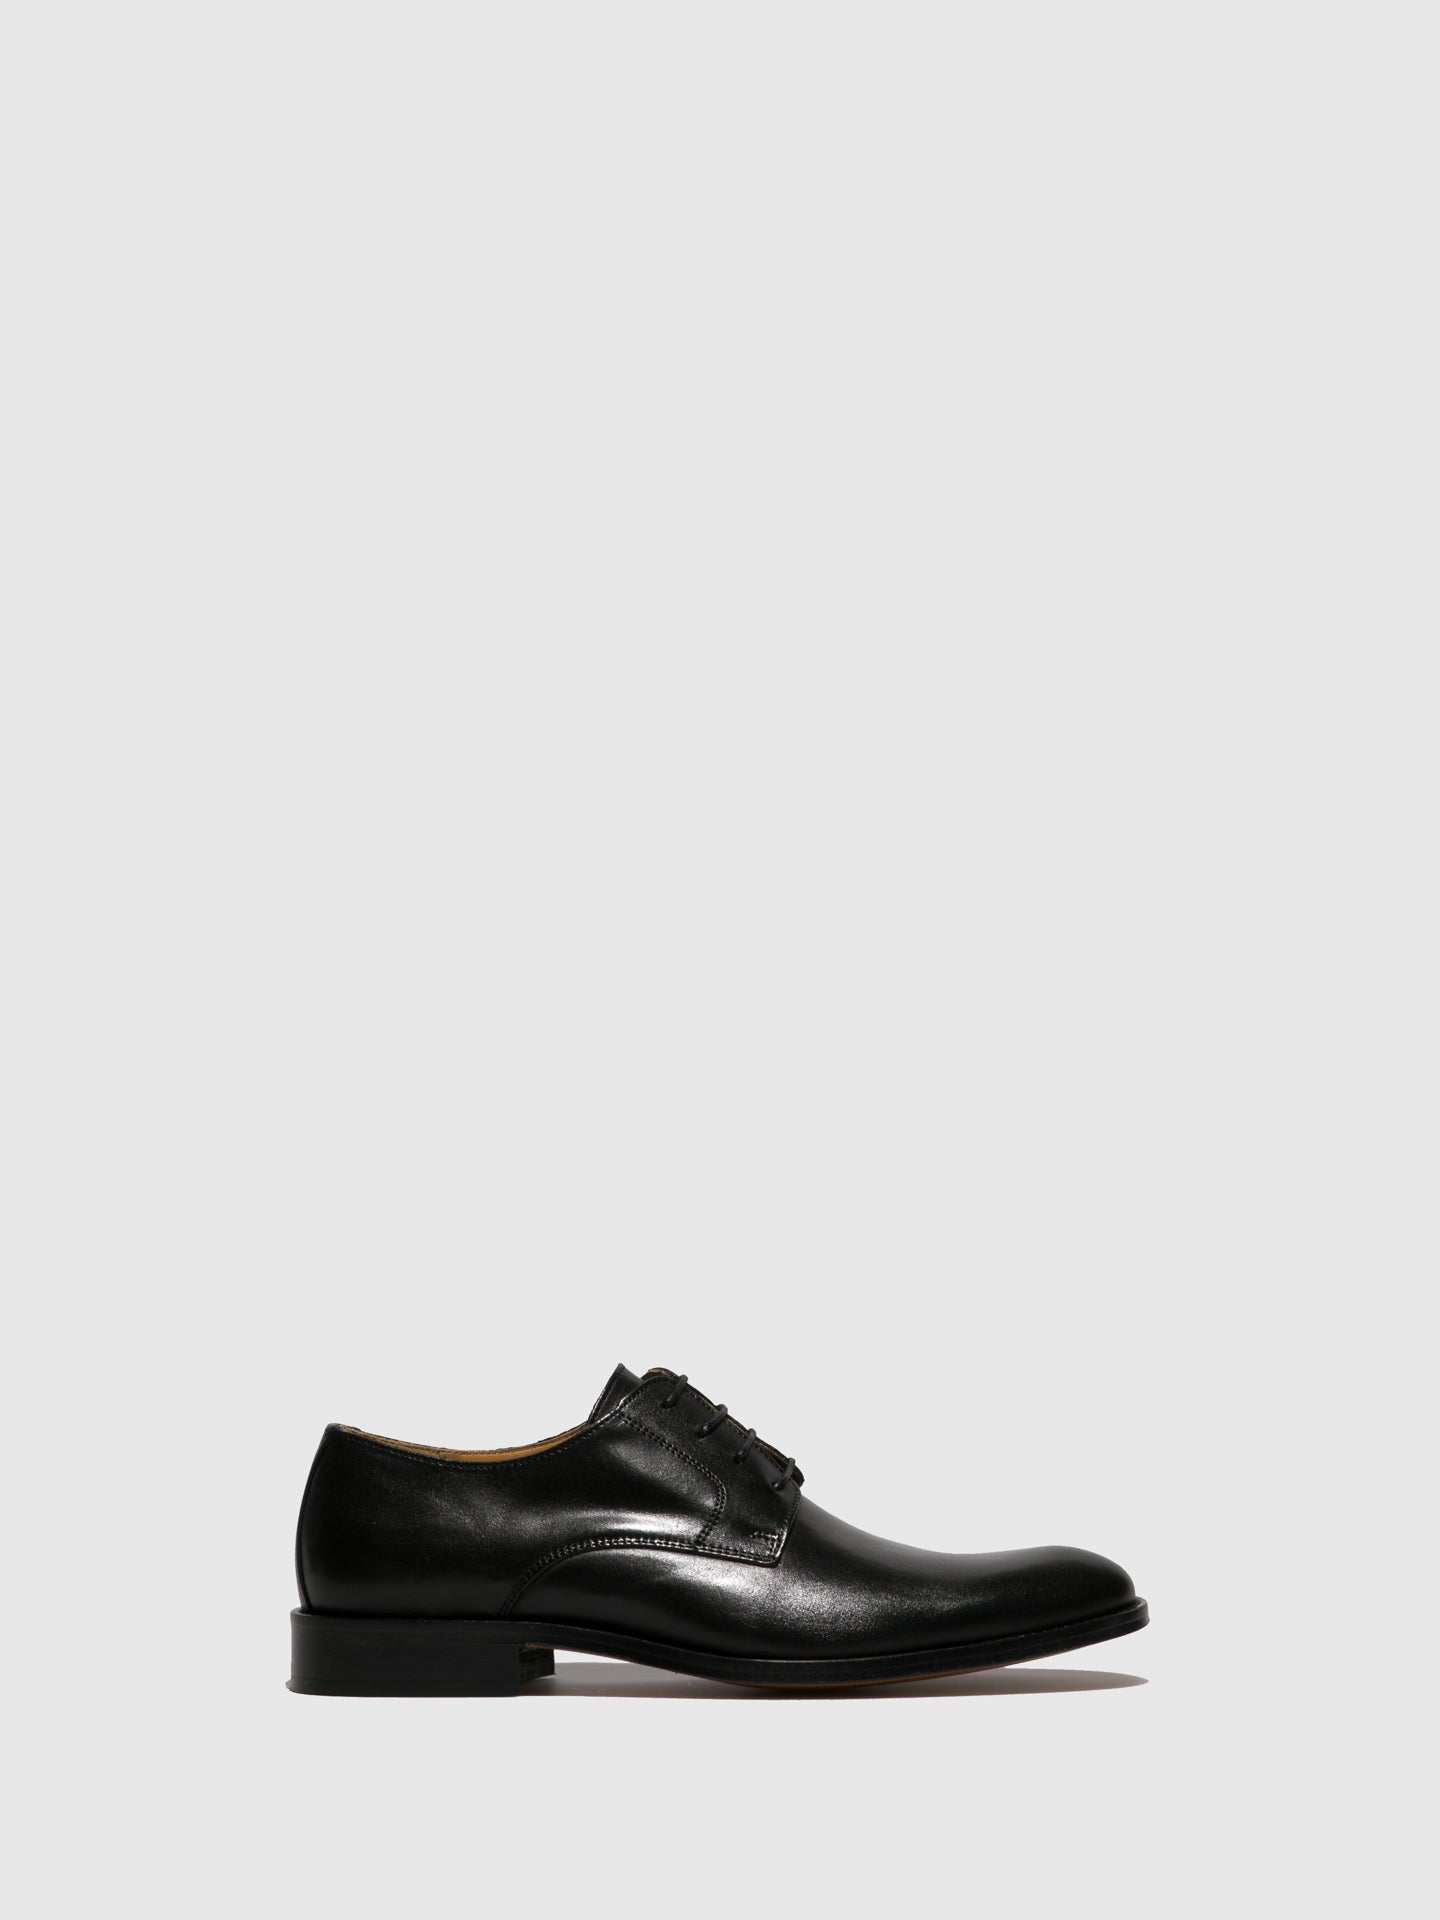 Foreva Black Classic Shoes